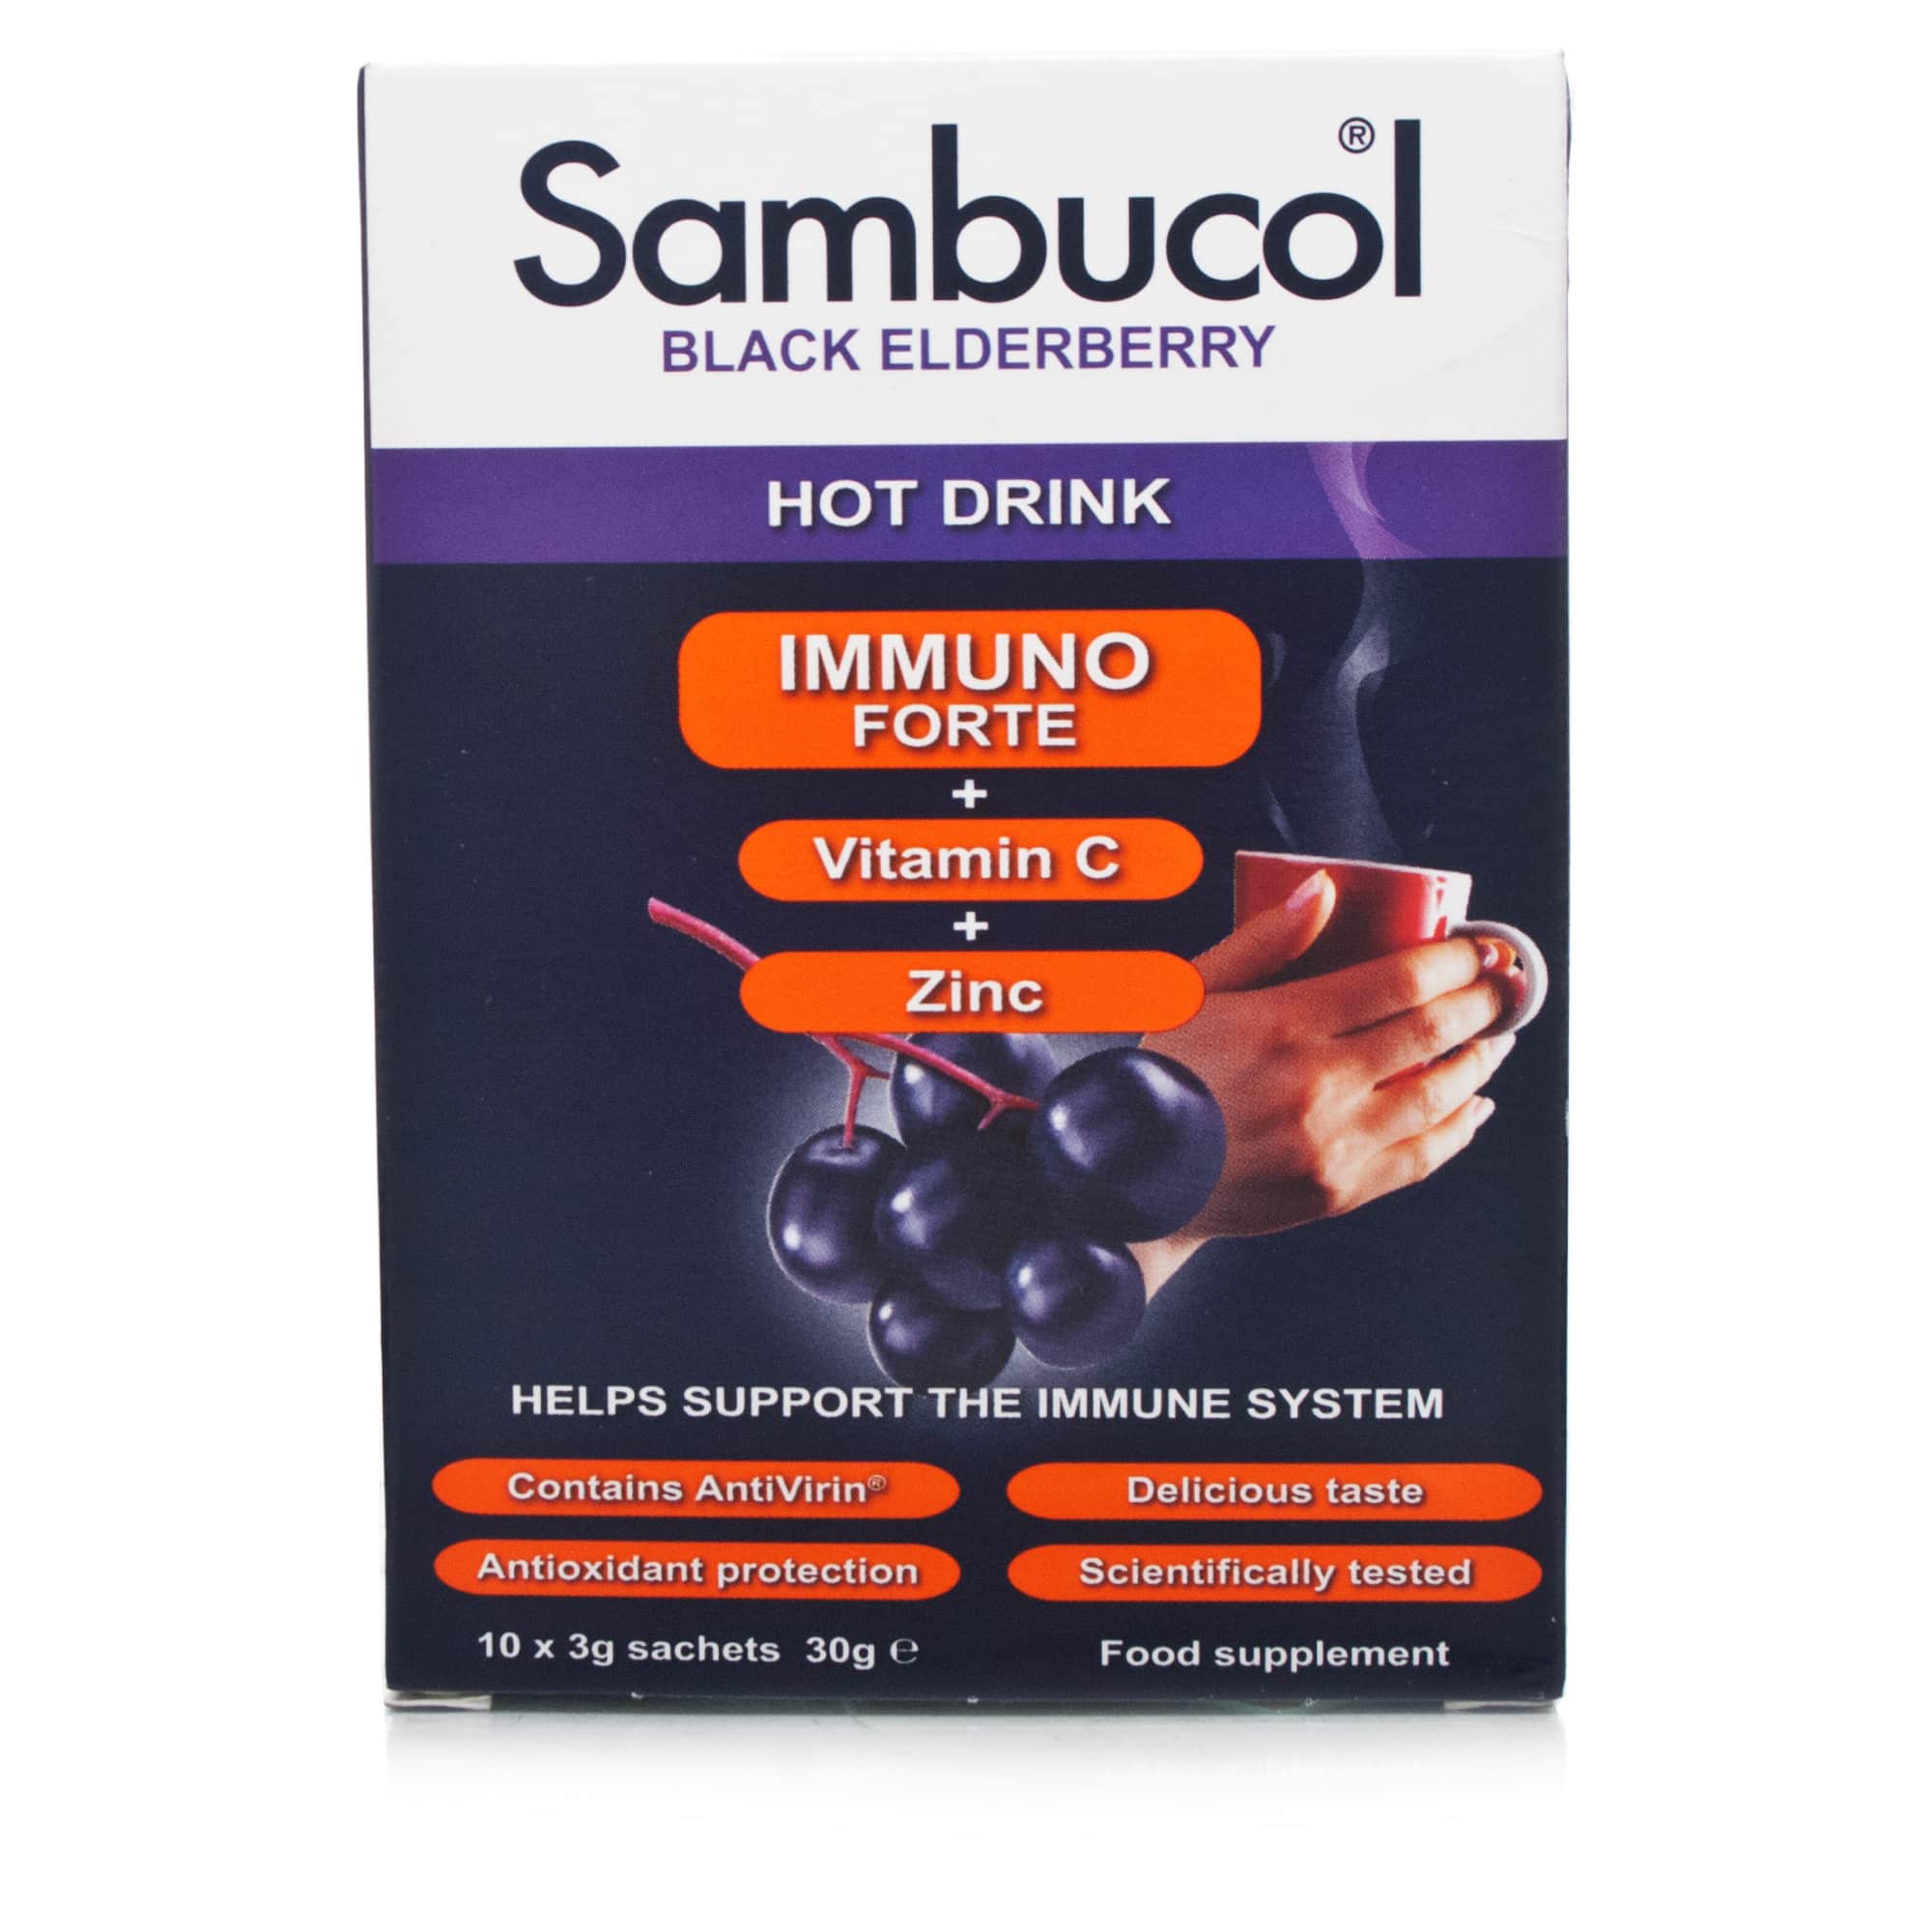 Sambucol Immuno Forte Hot Drink